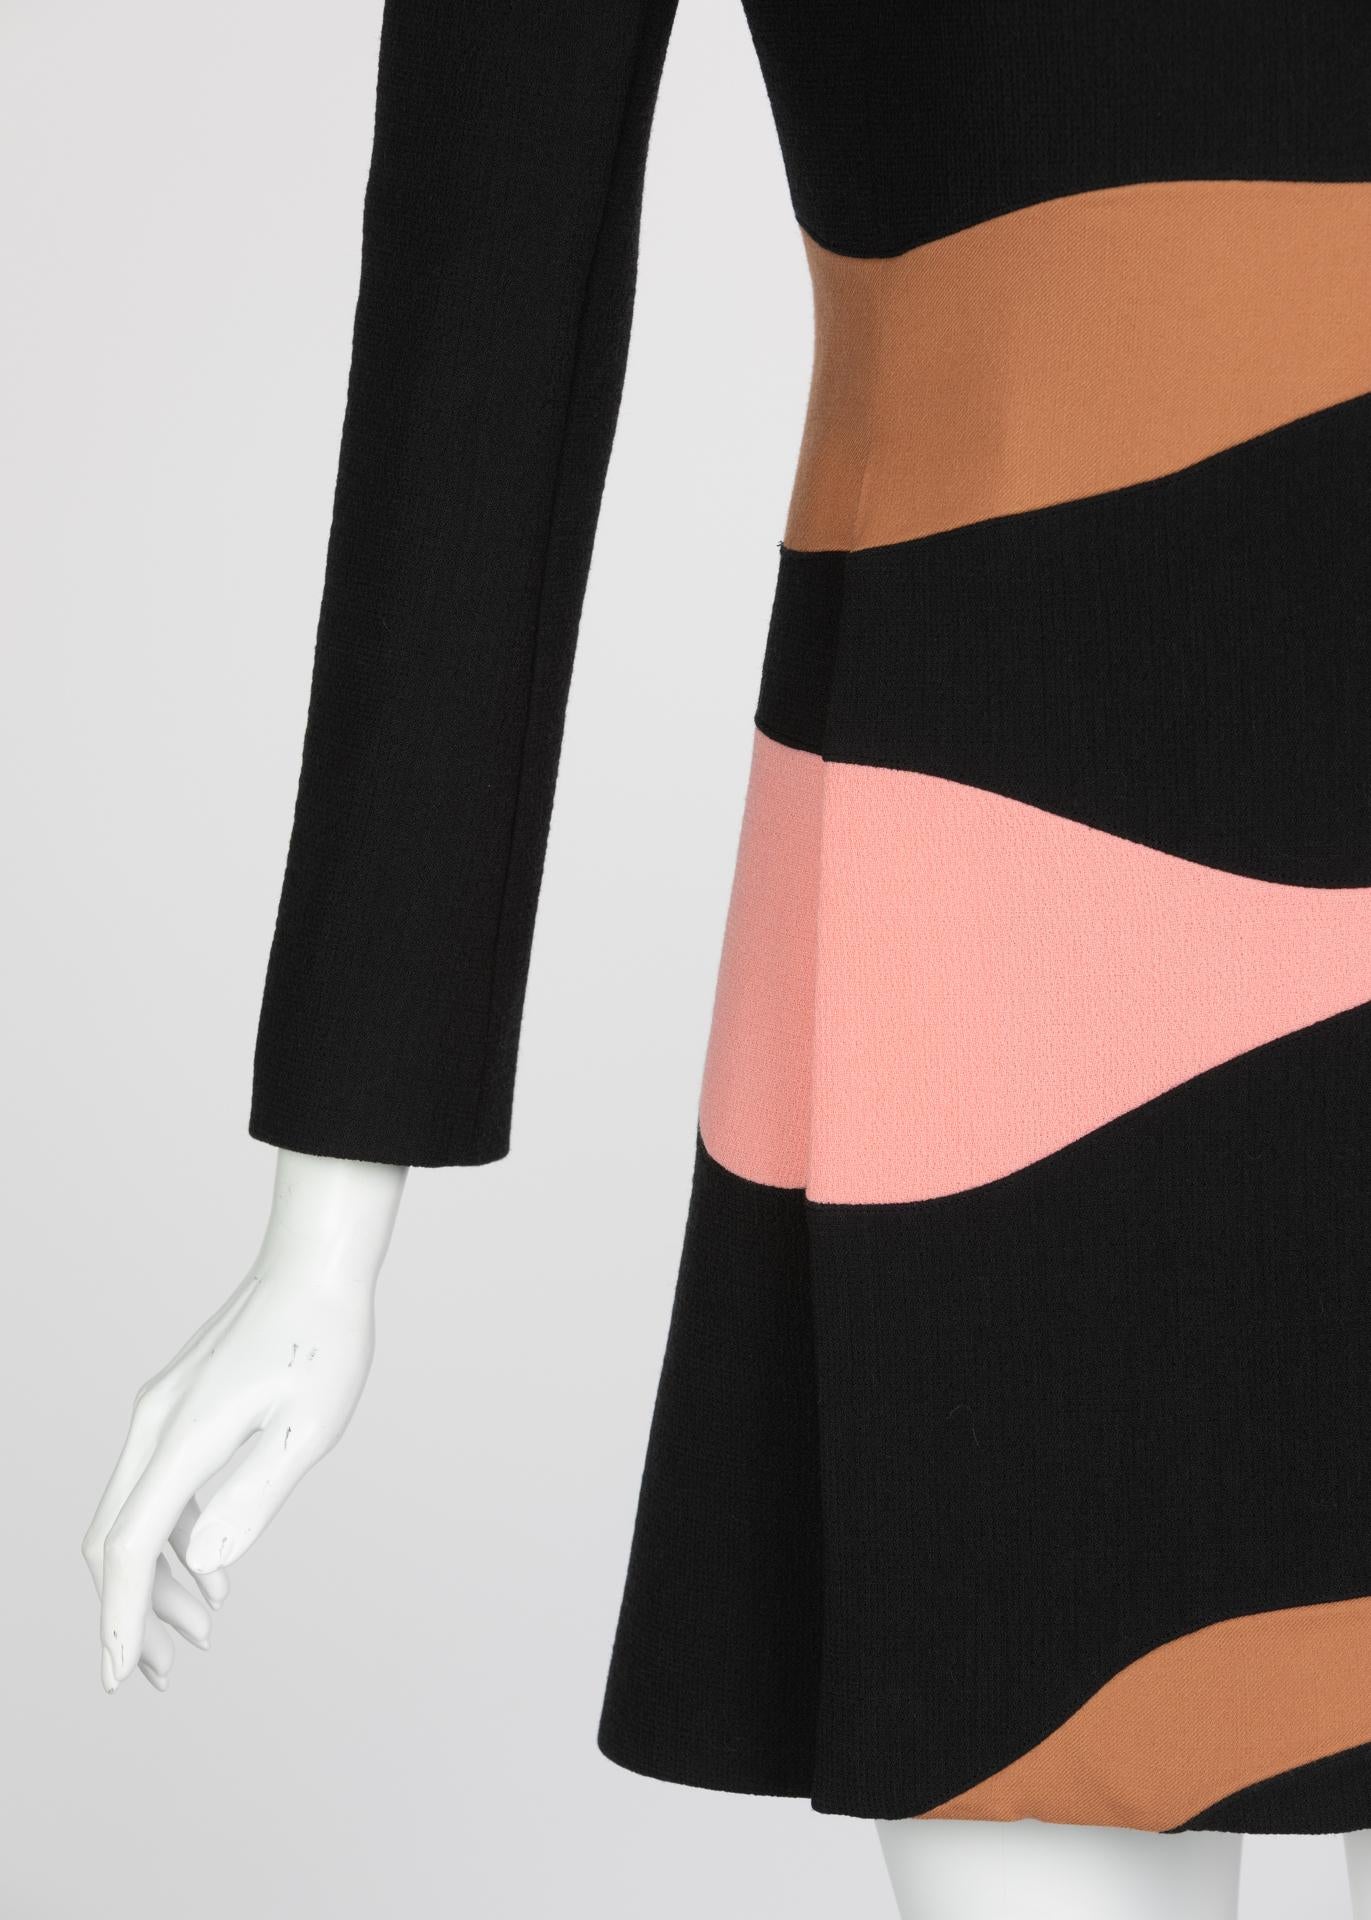 Christian Dior Abstract Stripe Coat Dress Runway Fall, 2015 3